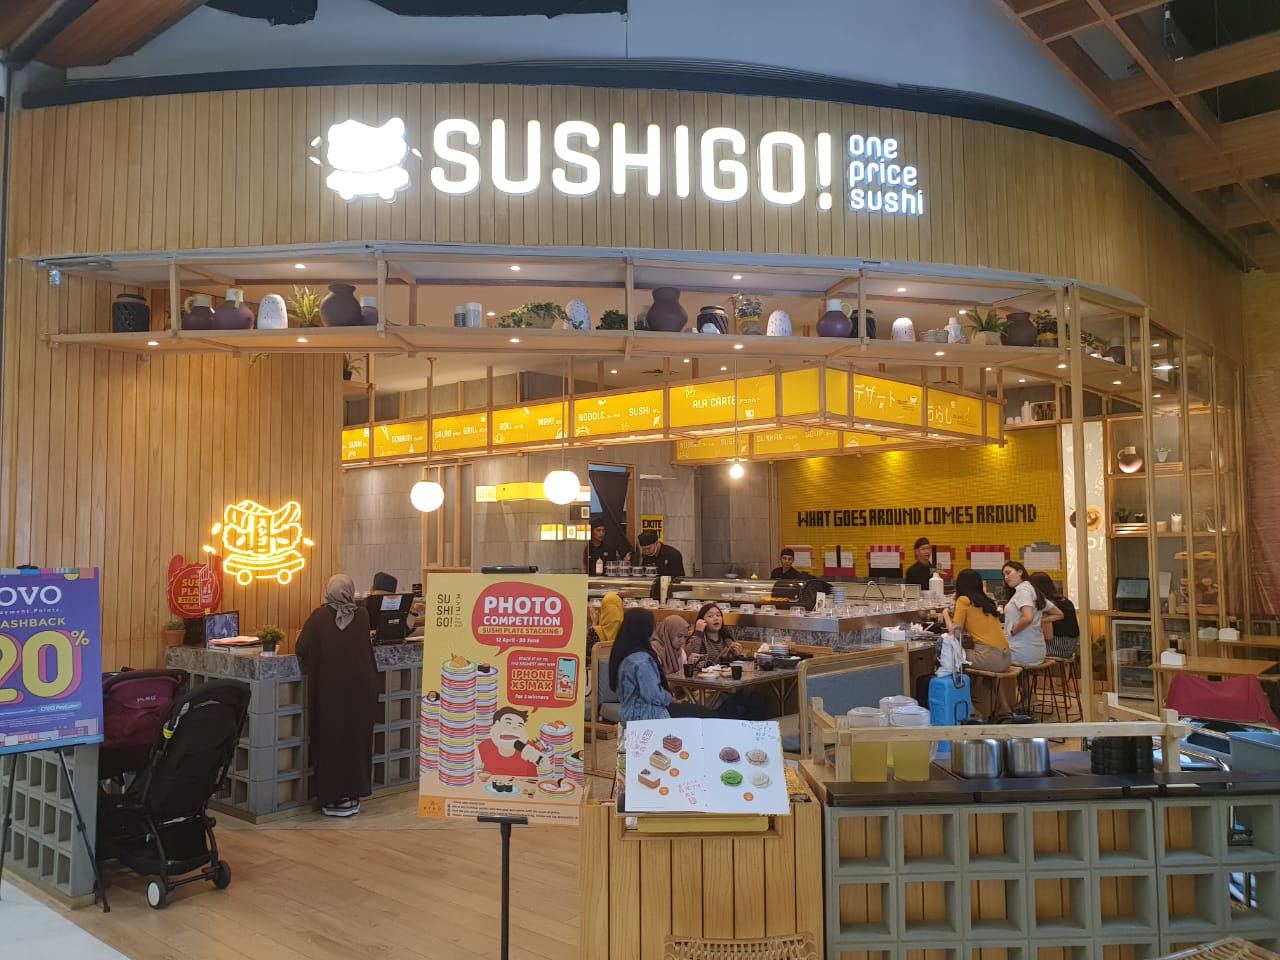 Sushi Go shop front in lippo mall puri st. moritz